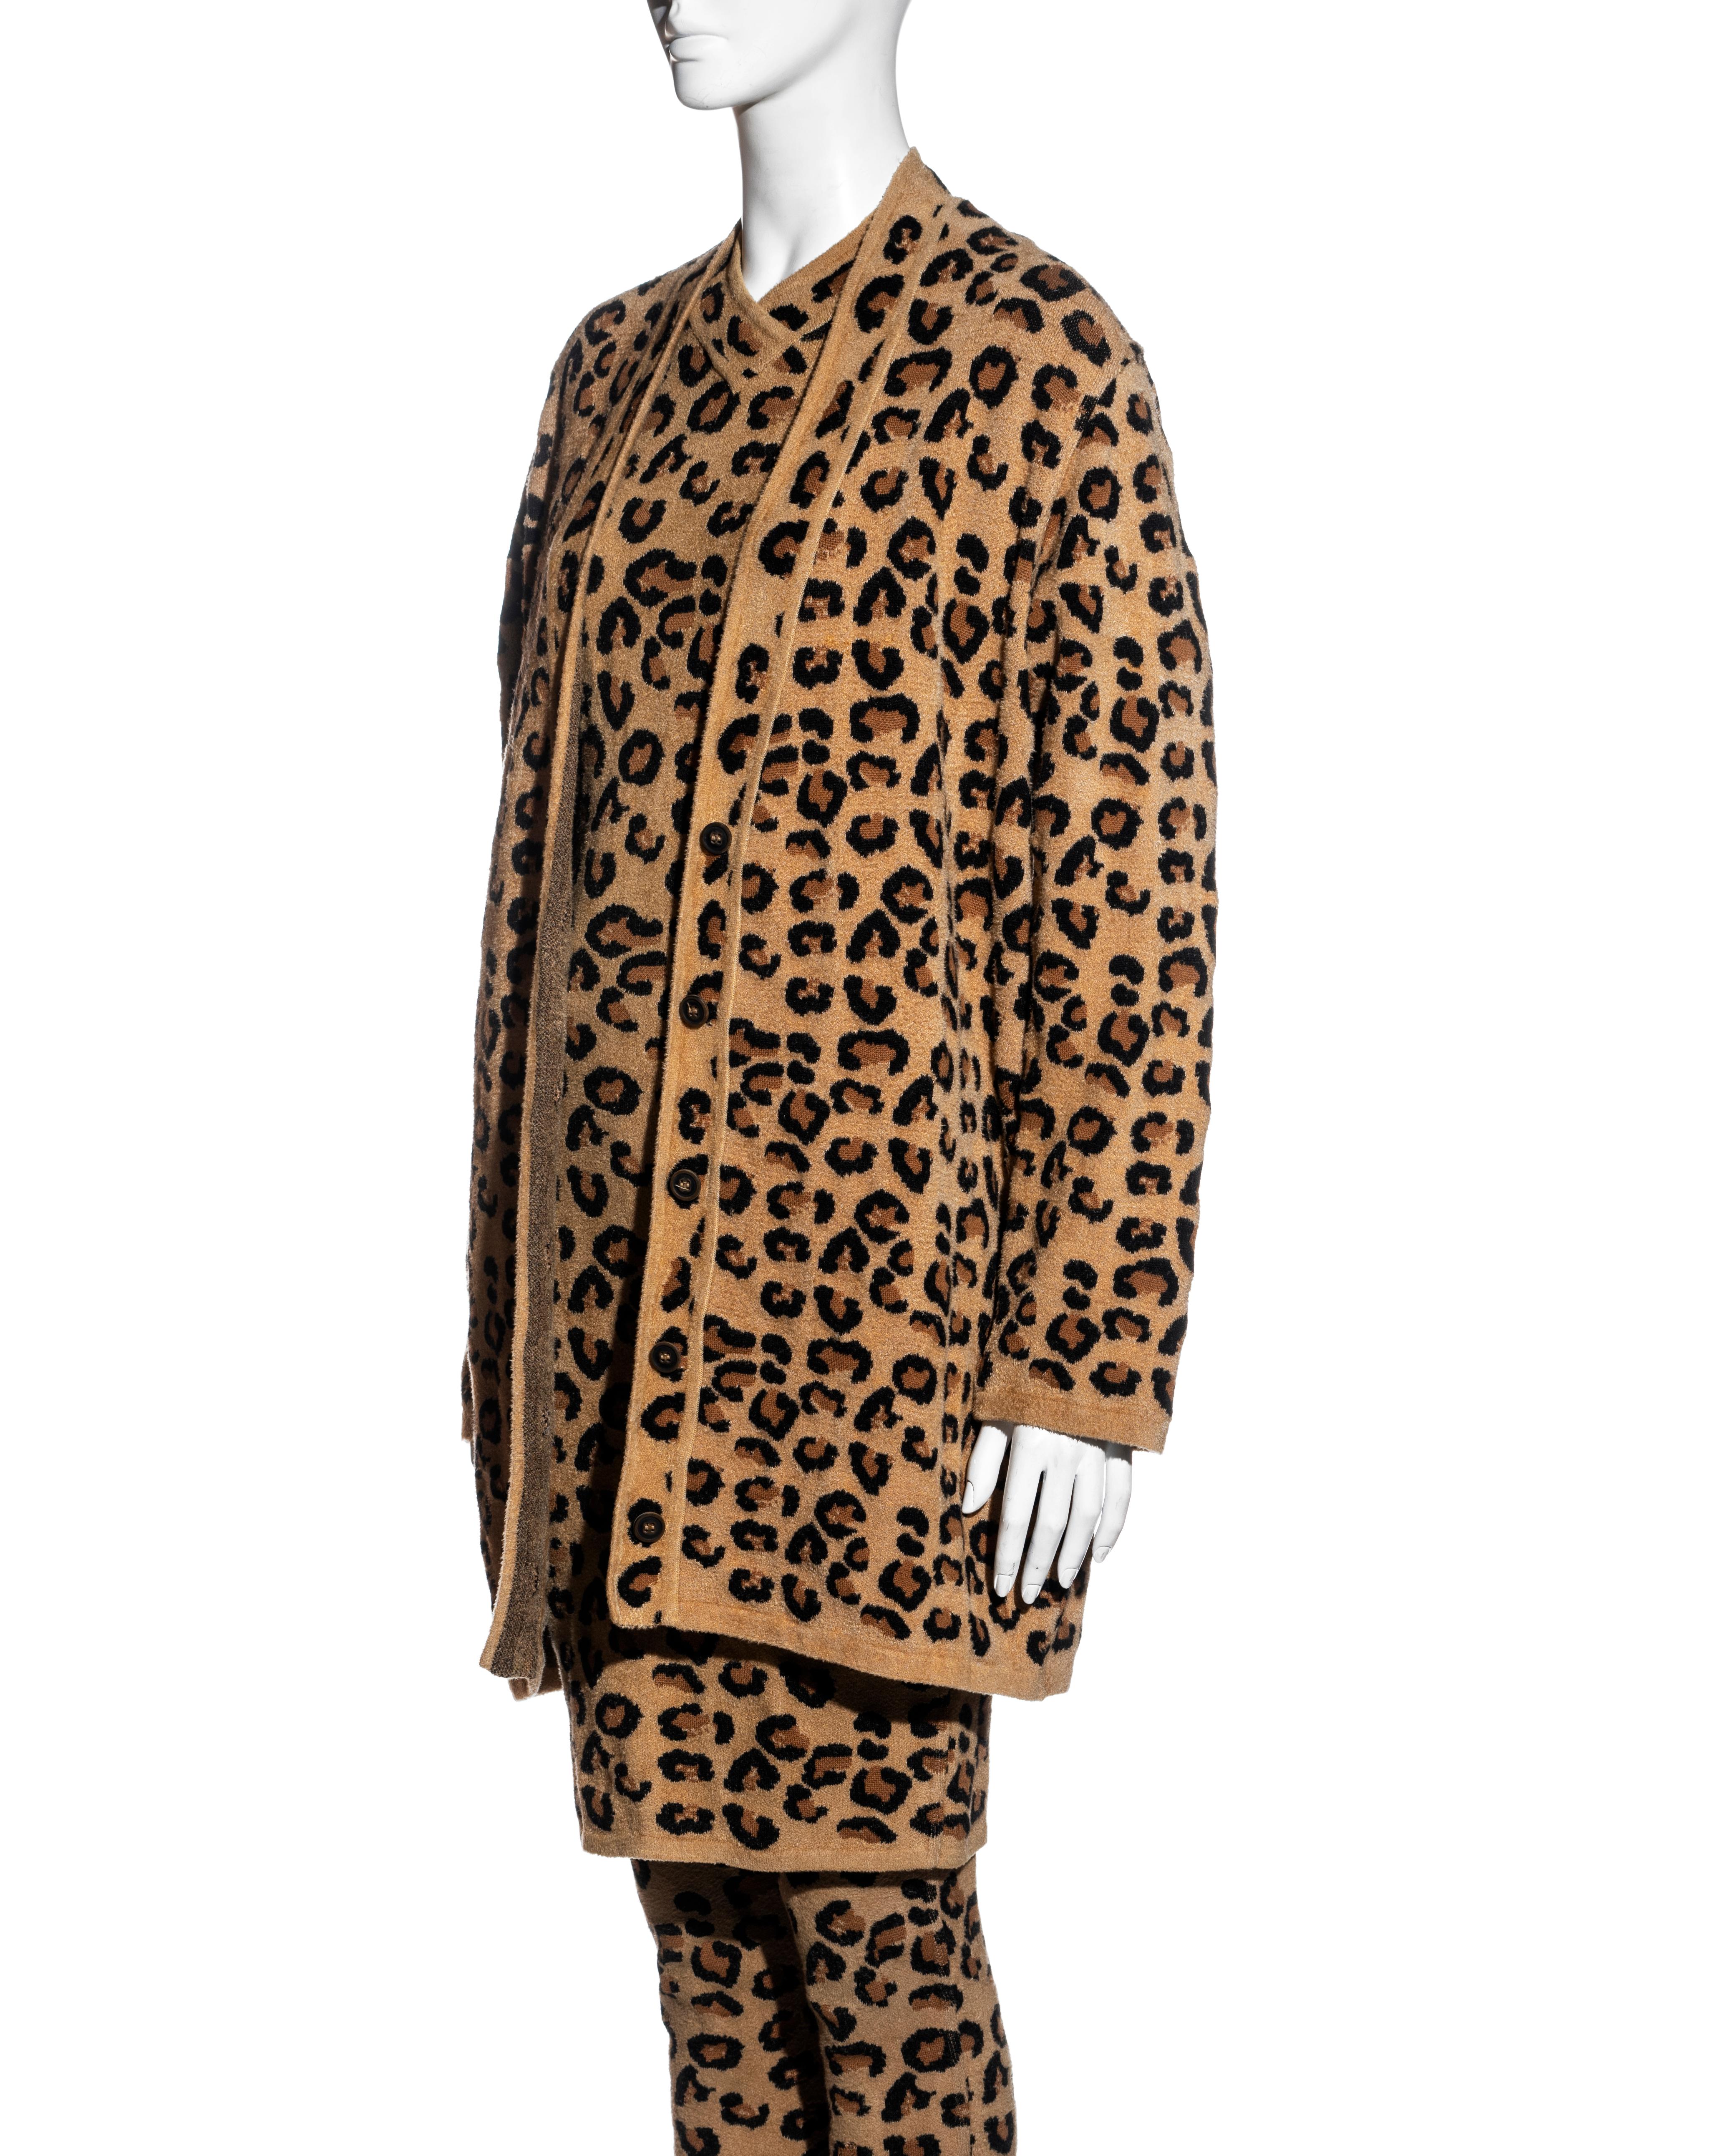 Azzedine Alaia leopard wool dress, cardigan, skirt and leggings set, fw 1991 For Sale 1